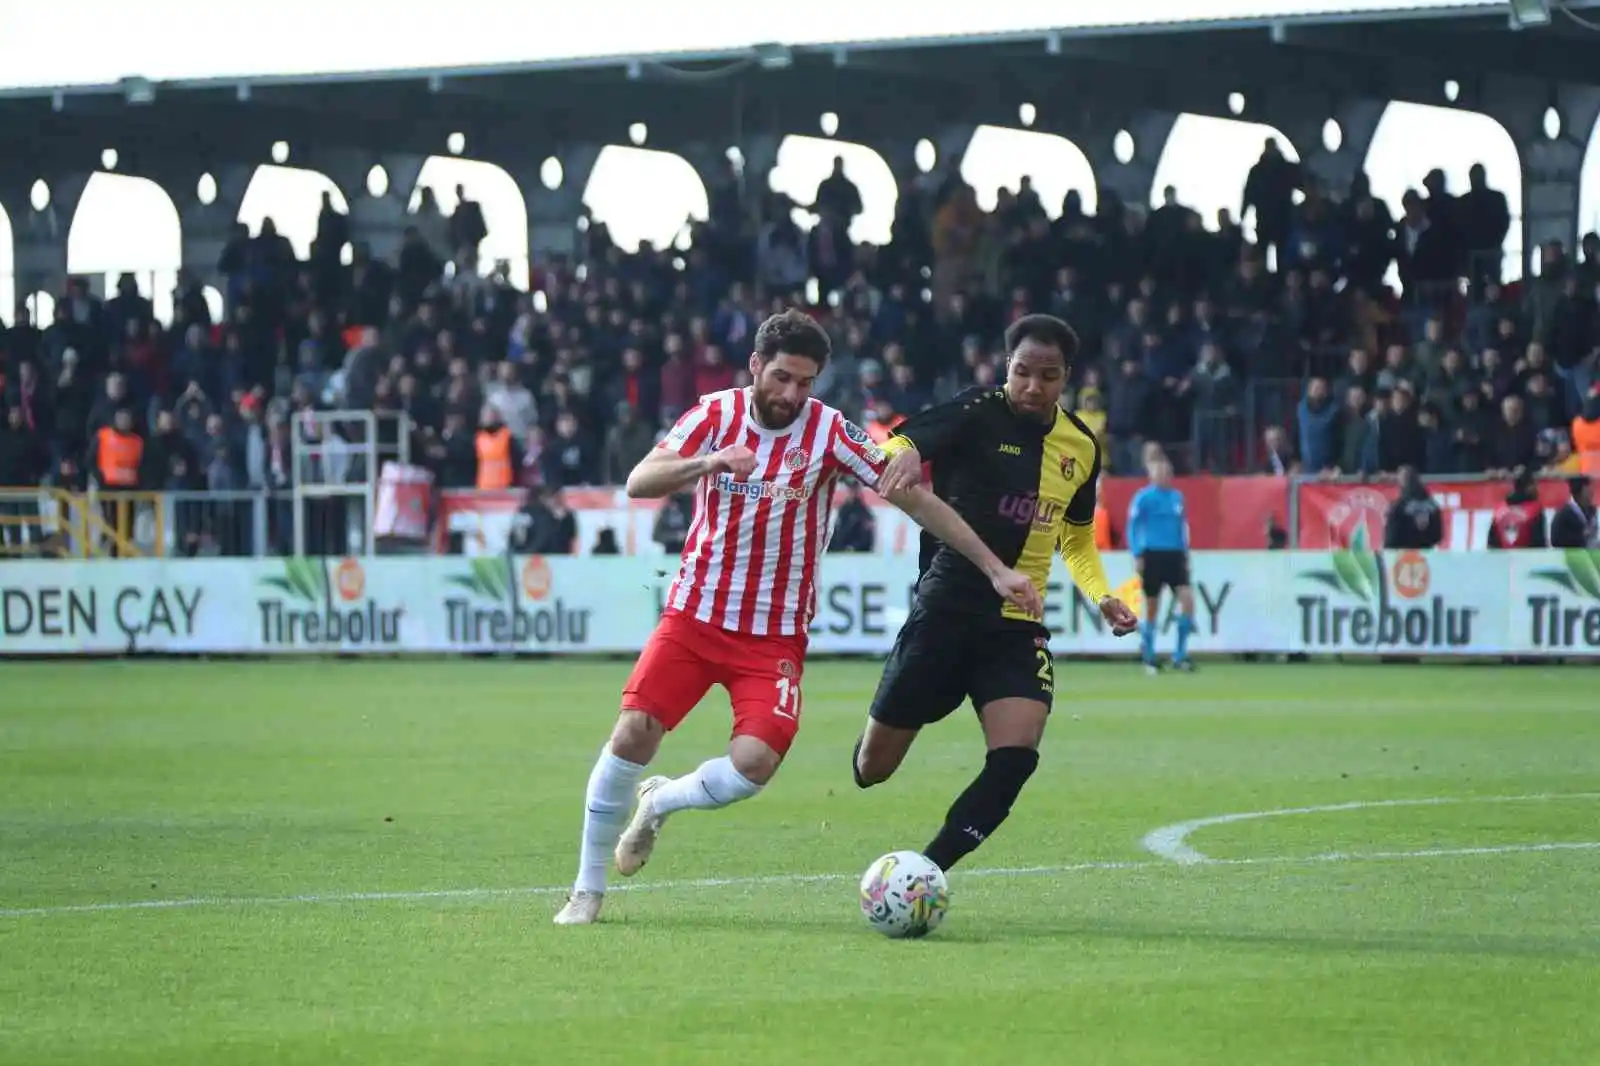 Spor Toto Süper Lig: Ümraniyespor: 0 - İstanbulspor: 2 (Maç sonucu)
